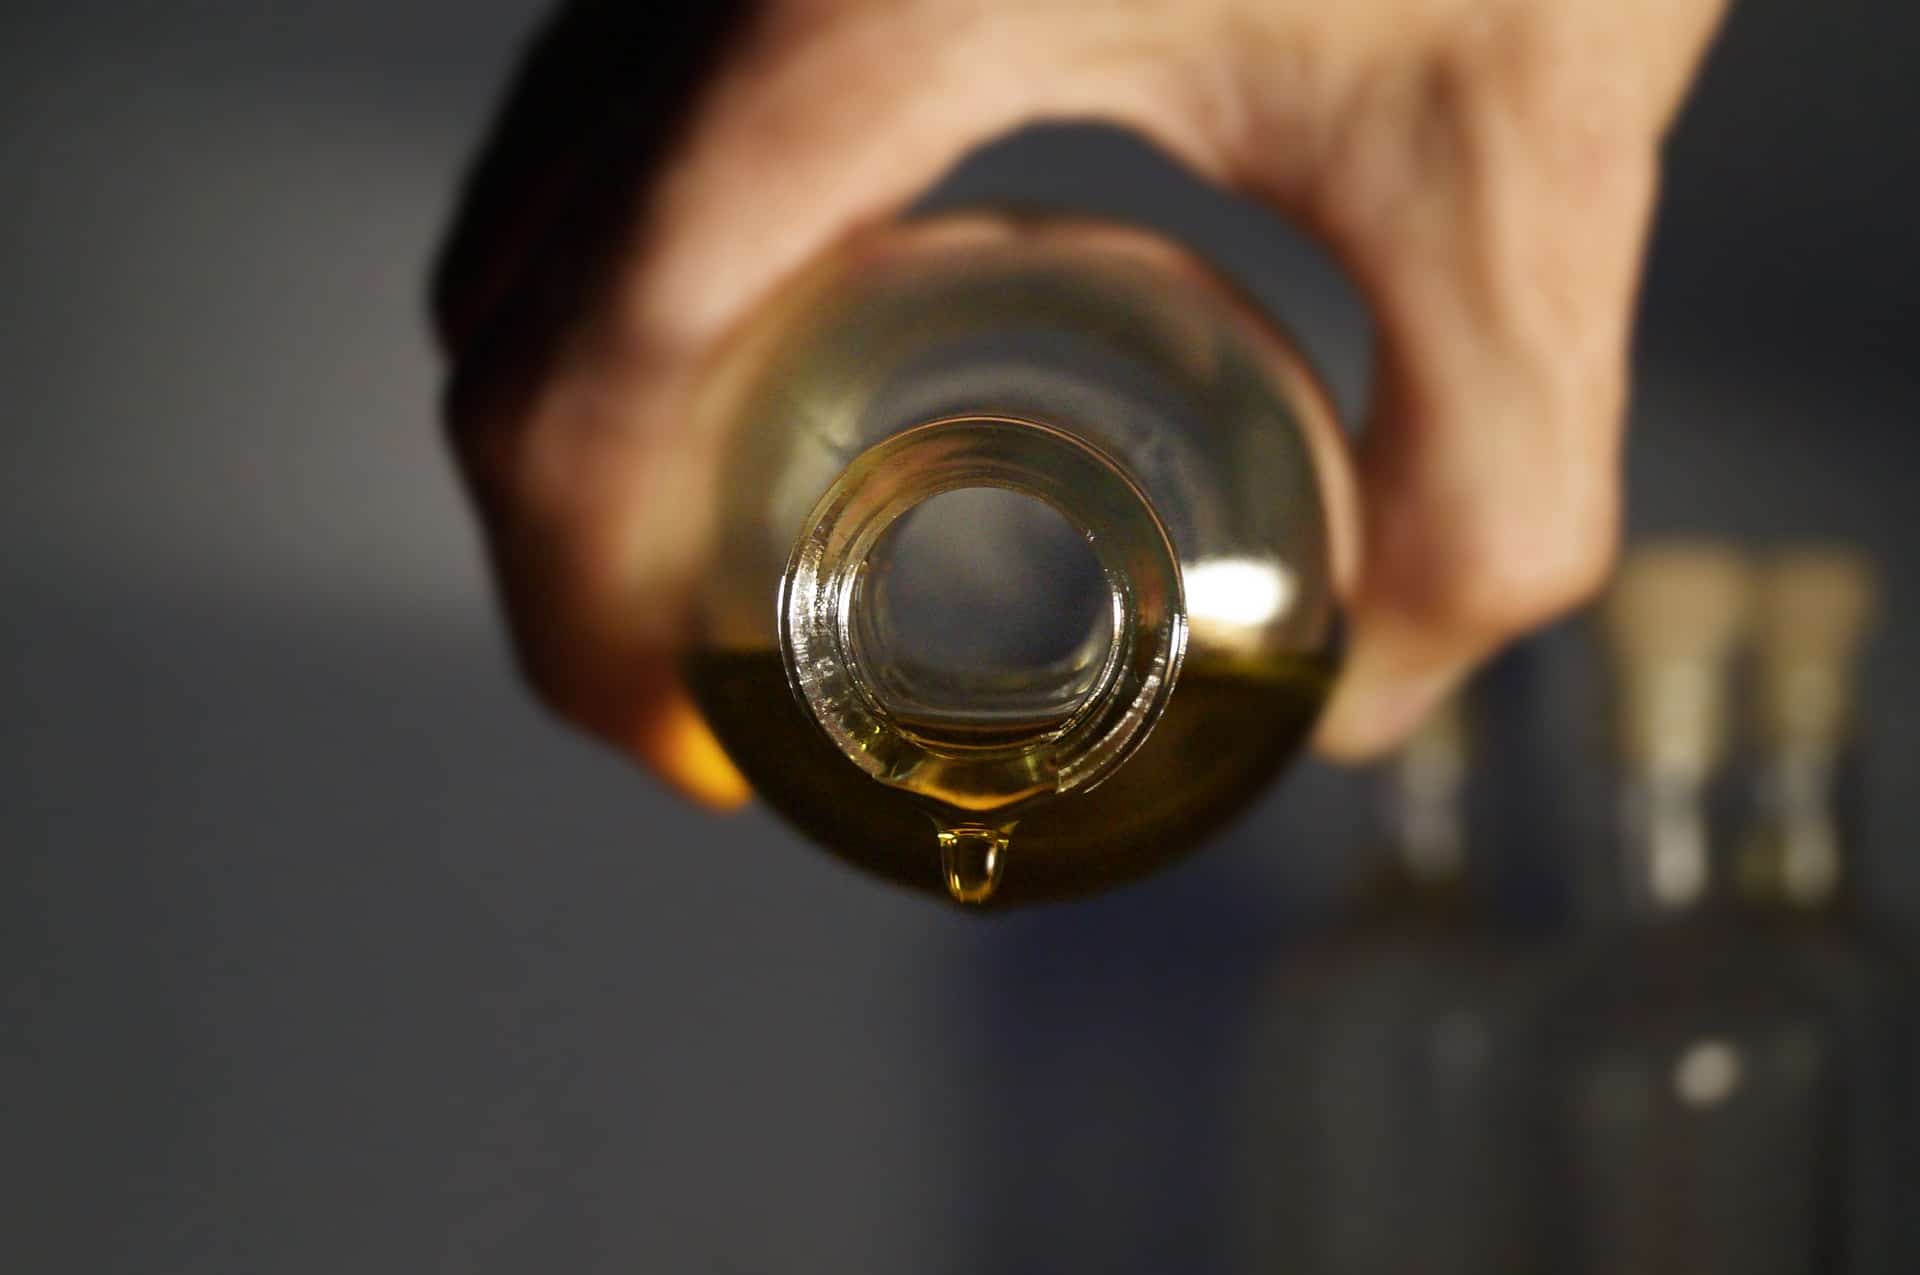 olive oil benefits for skin care